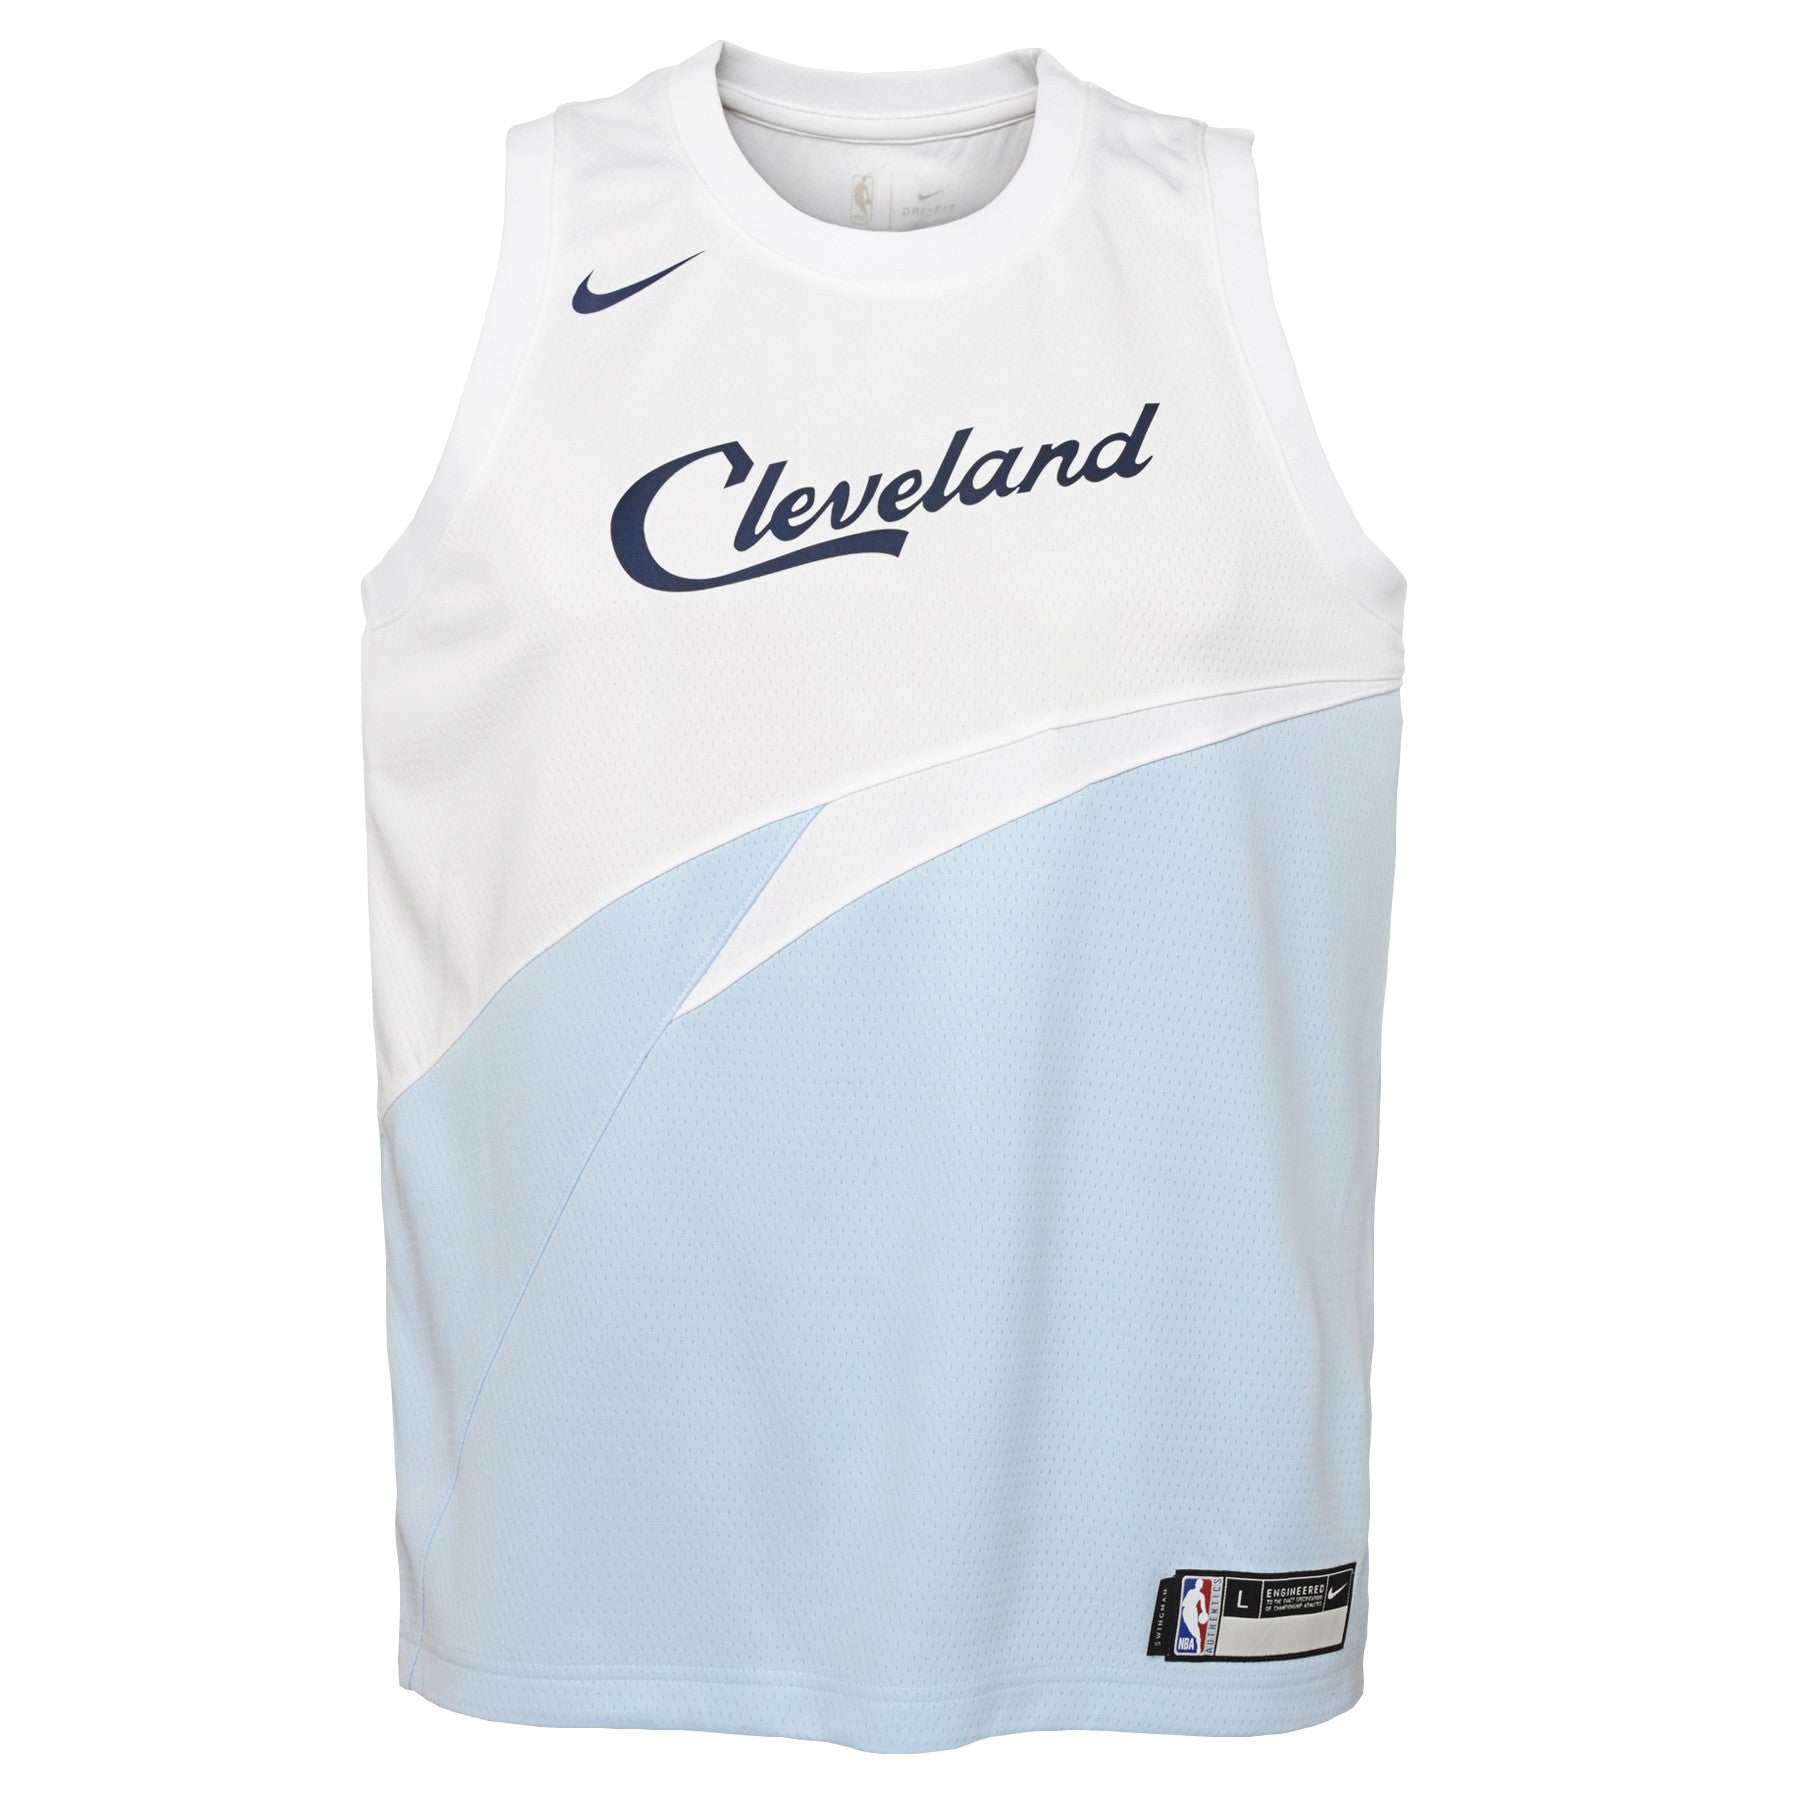 Nike Gray Cleveland Basketball Tee